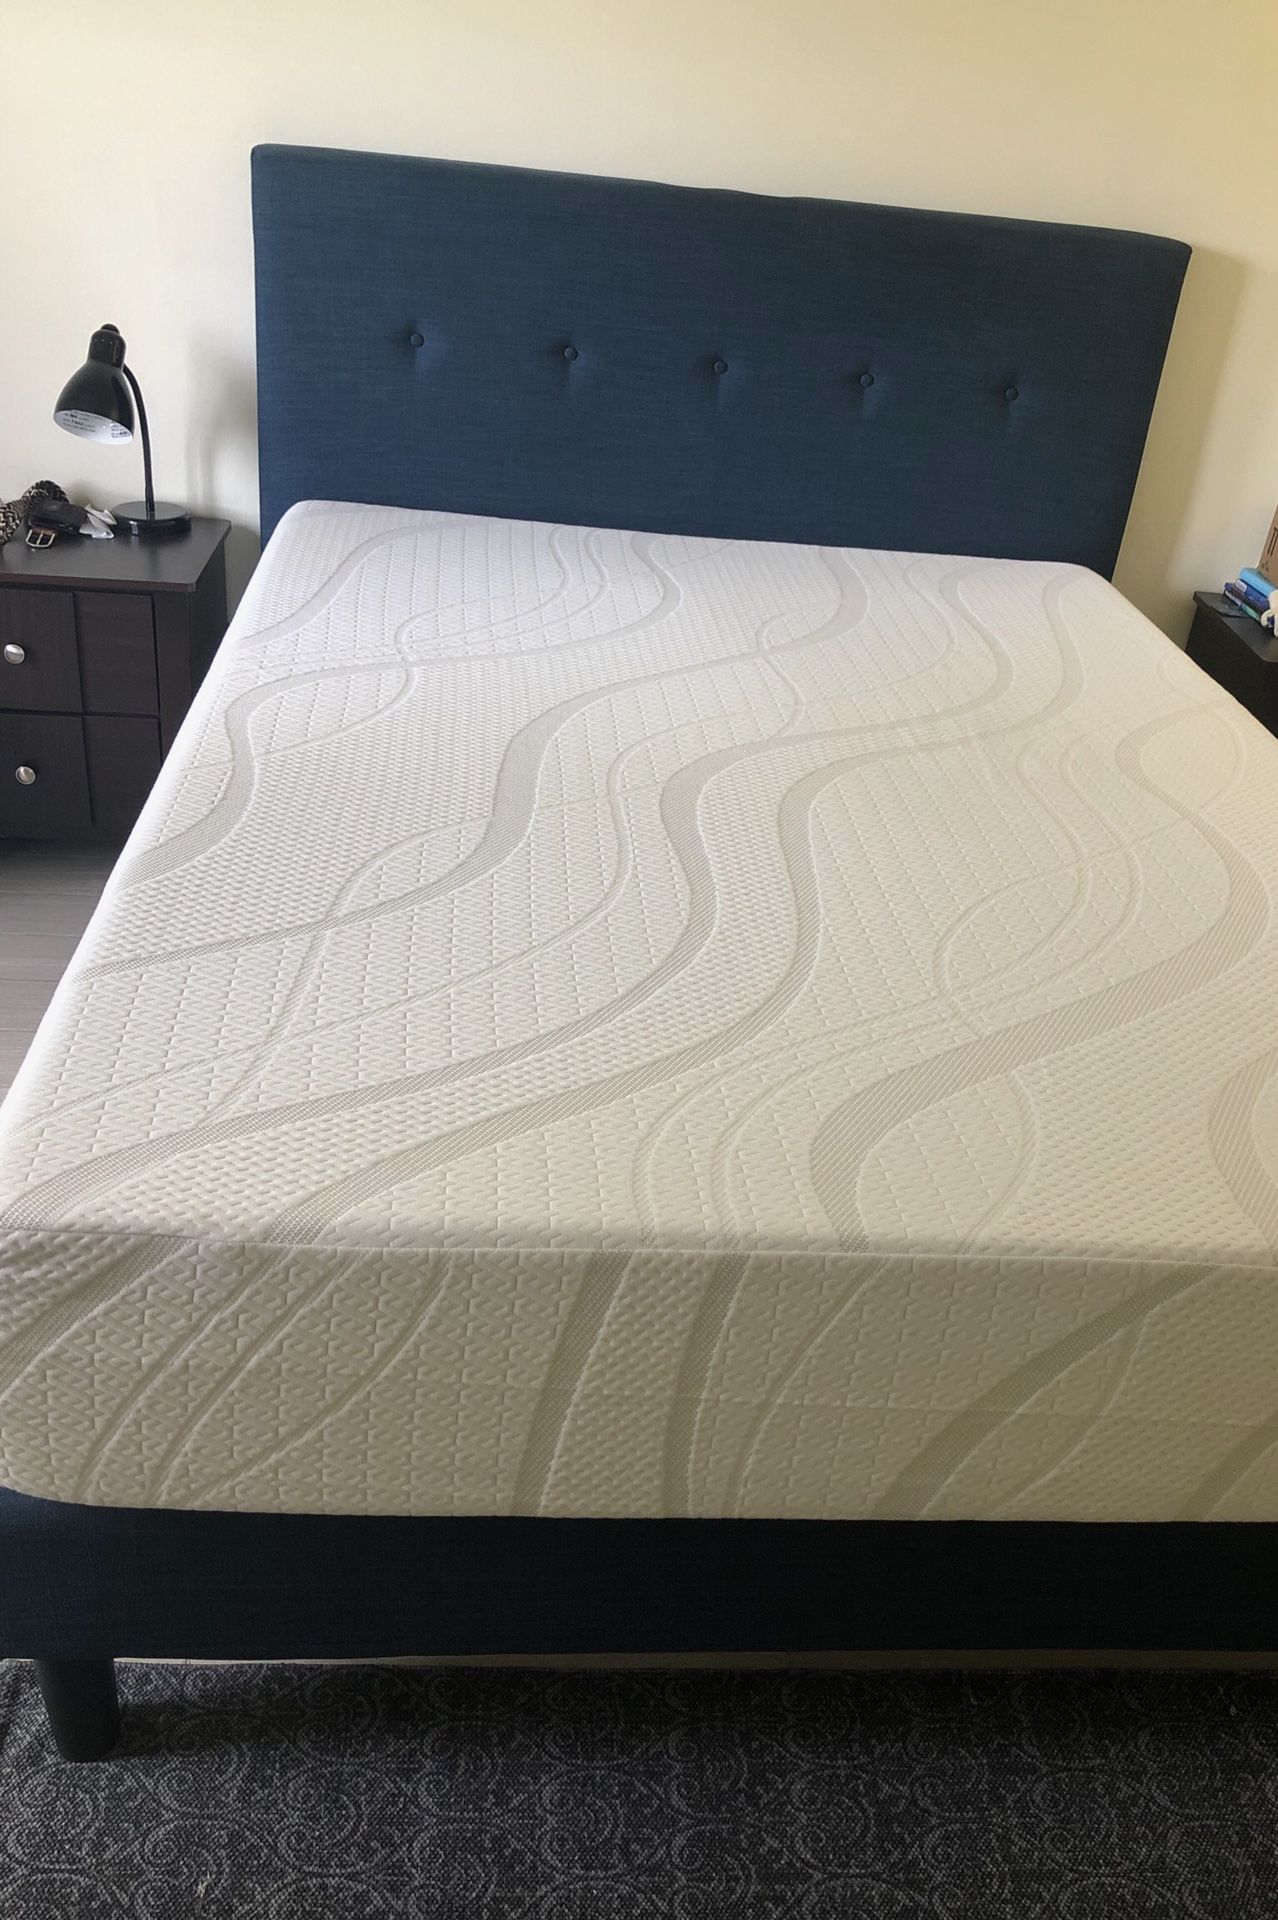 Queen Bed - almost new